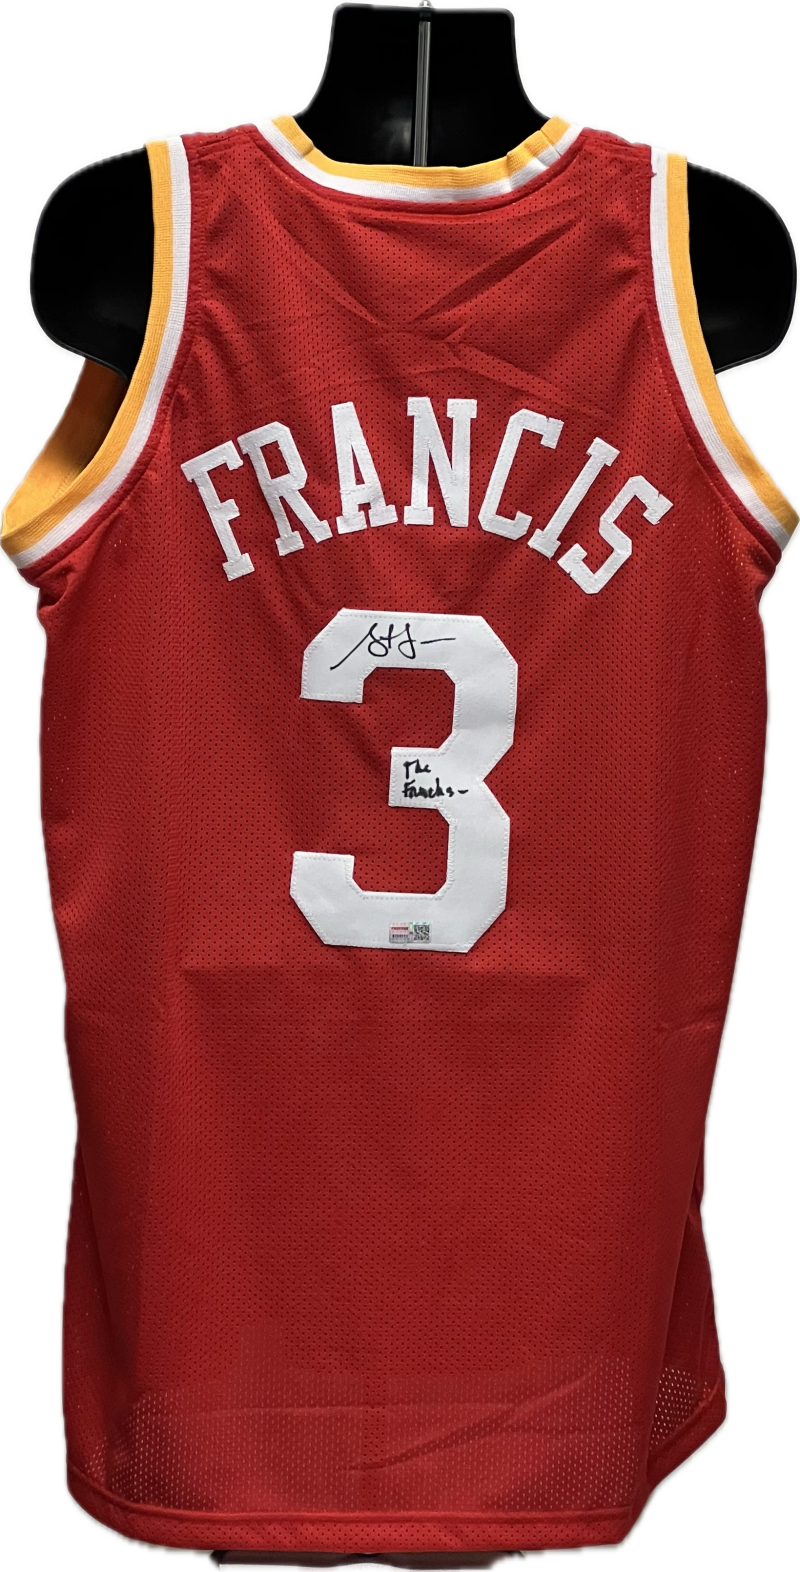 Steve Francis Autograph Signed Houston Rockets Basketball Tristar Authentic  Image 1